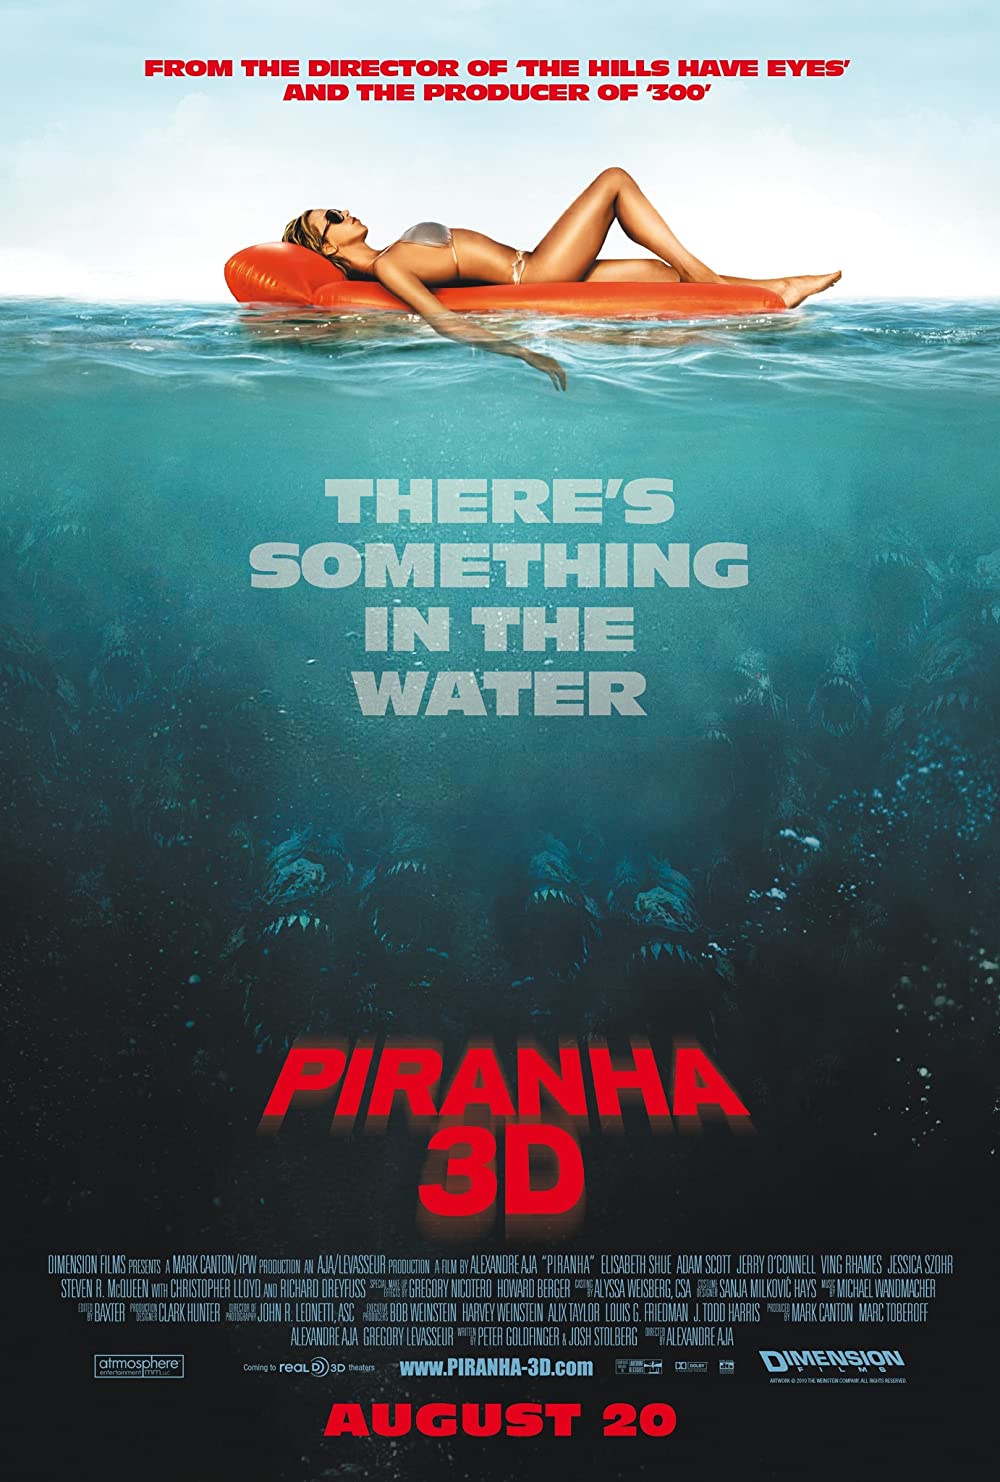 FULL MOVIE: Piranha 3D (2010) [Horror]